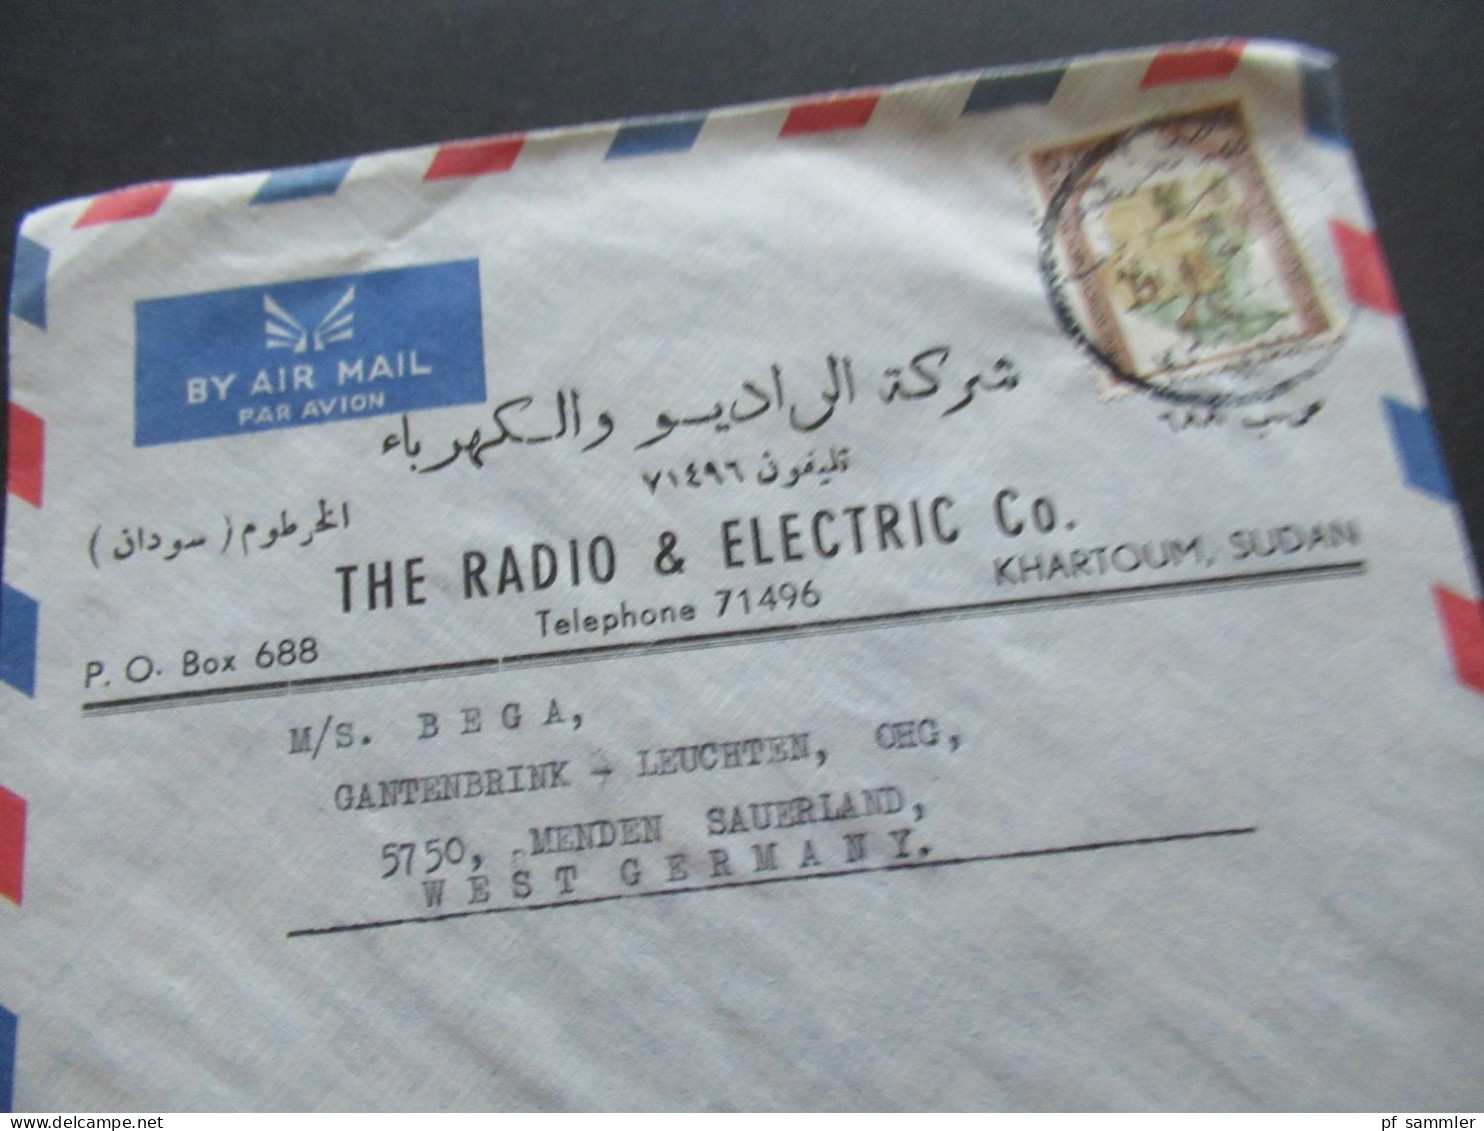 Afrika Sudan 1966 Air Mail Cover Stempel Khartoum Mails Sudan Umschlag The Radio & Electric Co Khartoum Sudan - Soudan (1954-...)